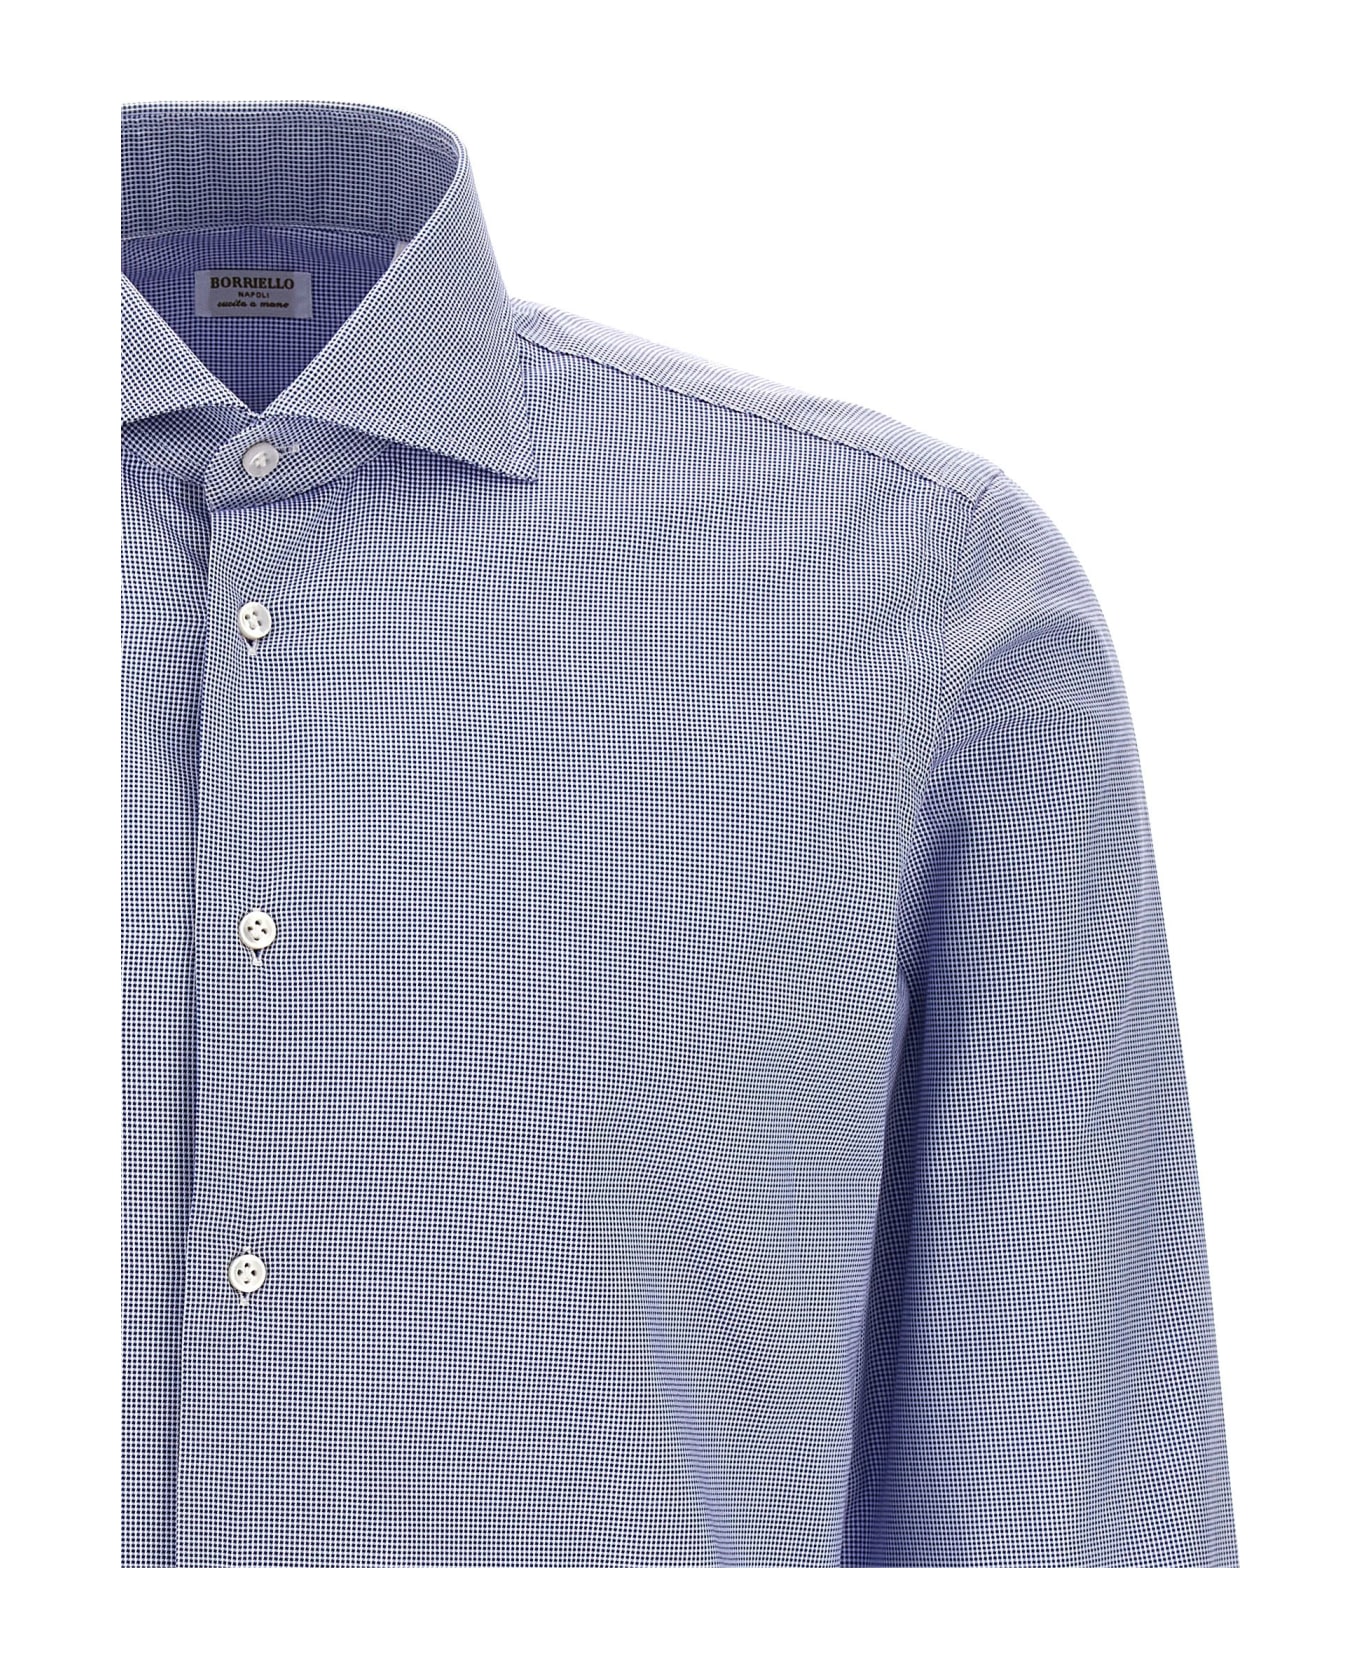 Borriello Napoli Micro Operated Shirt - Light Blue